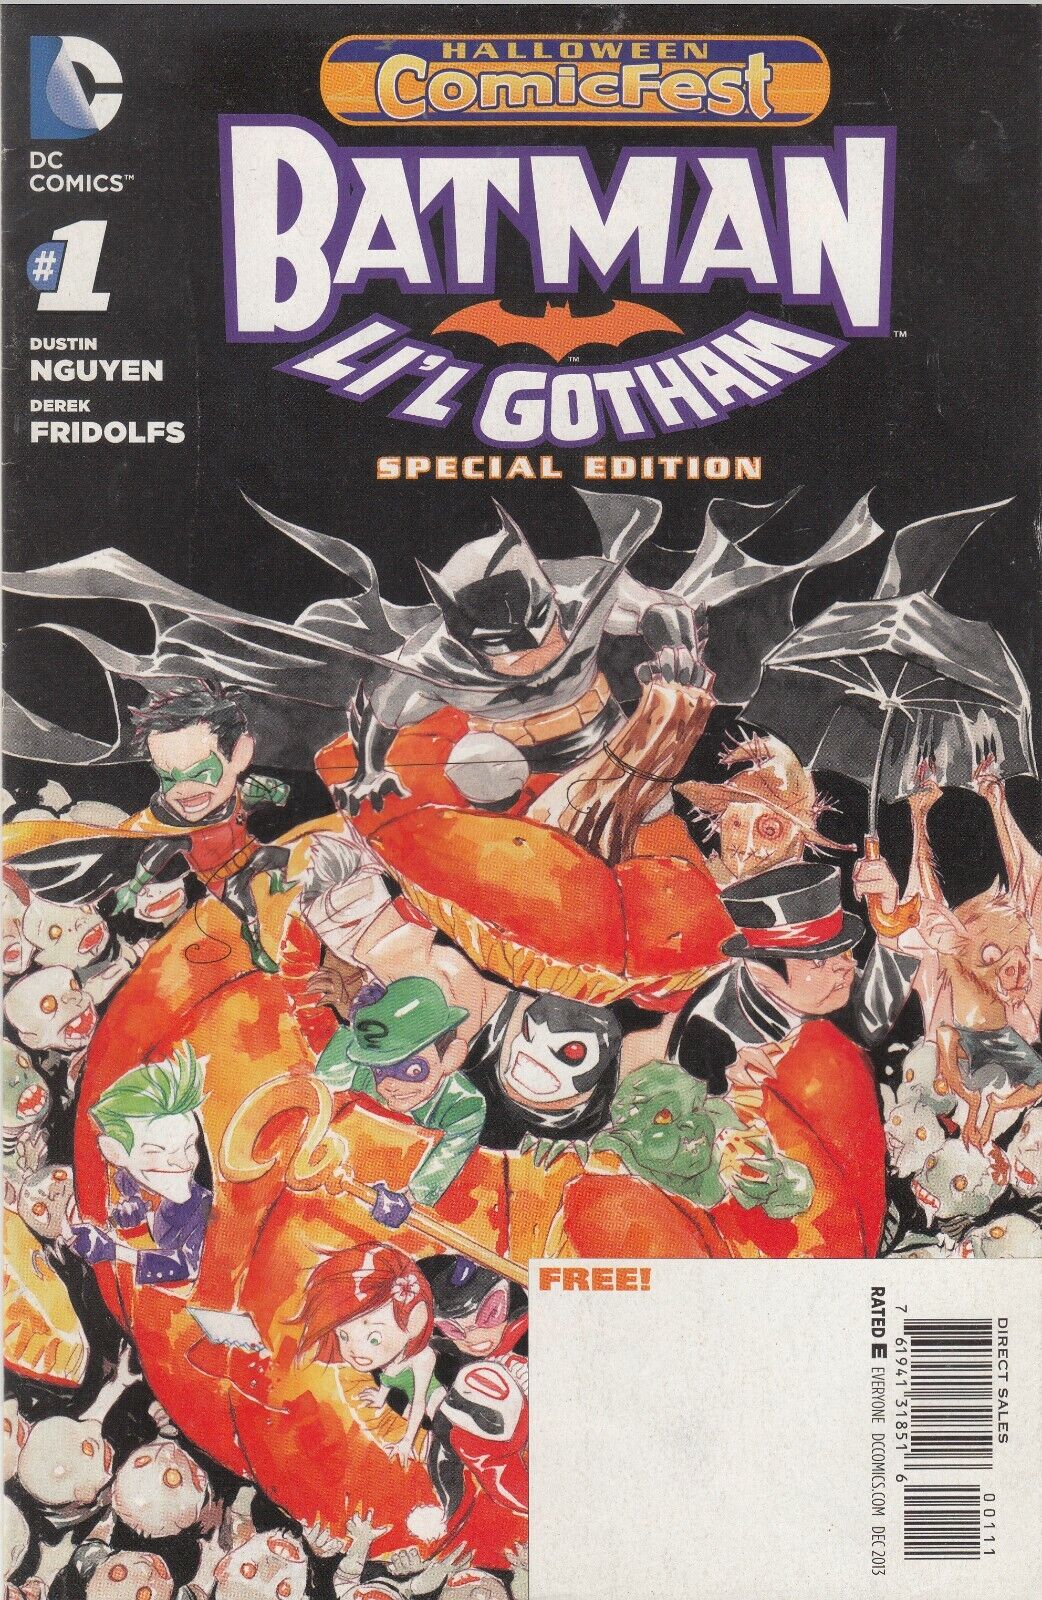 BATMAN Li\'l Gotham Special Edition #1 (2013, DC)